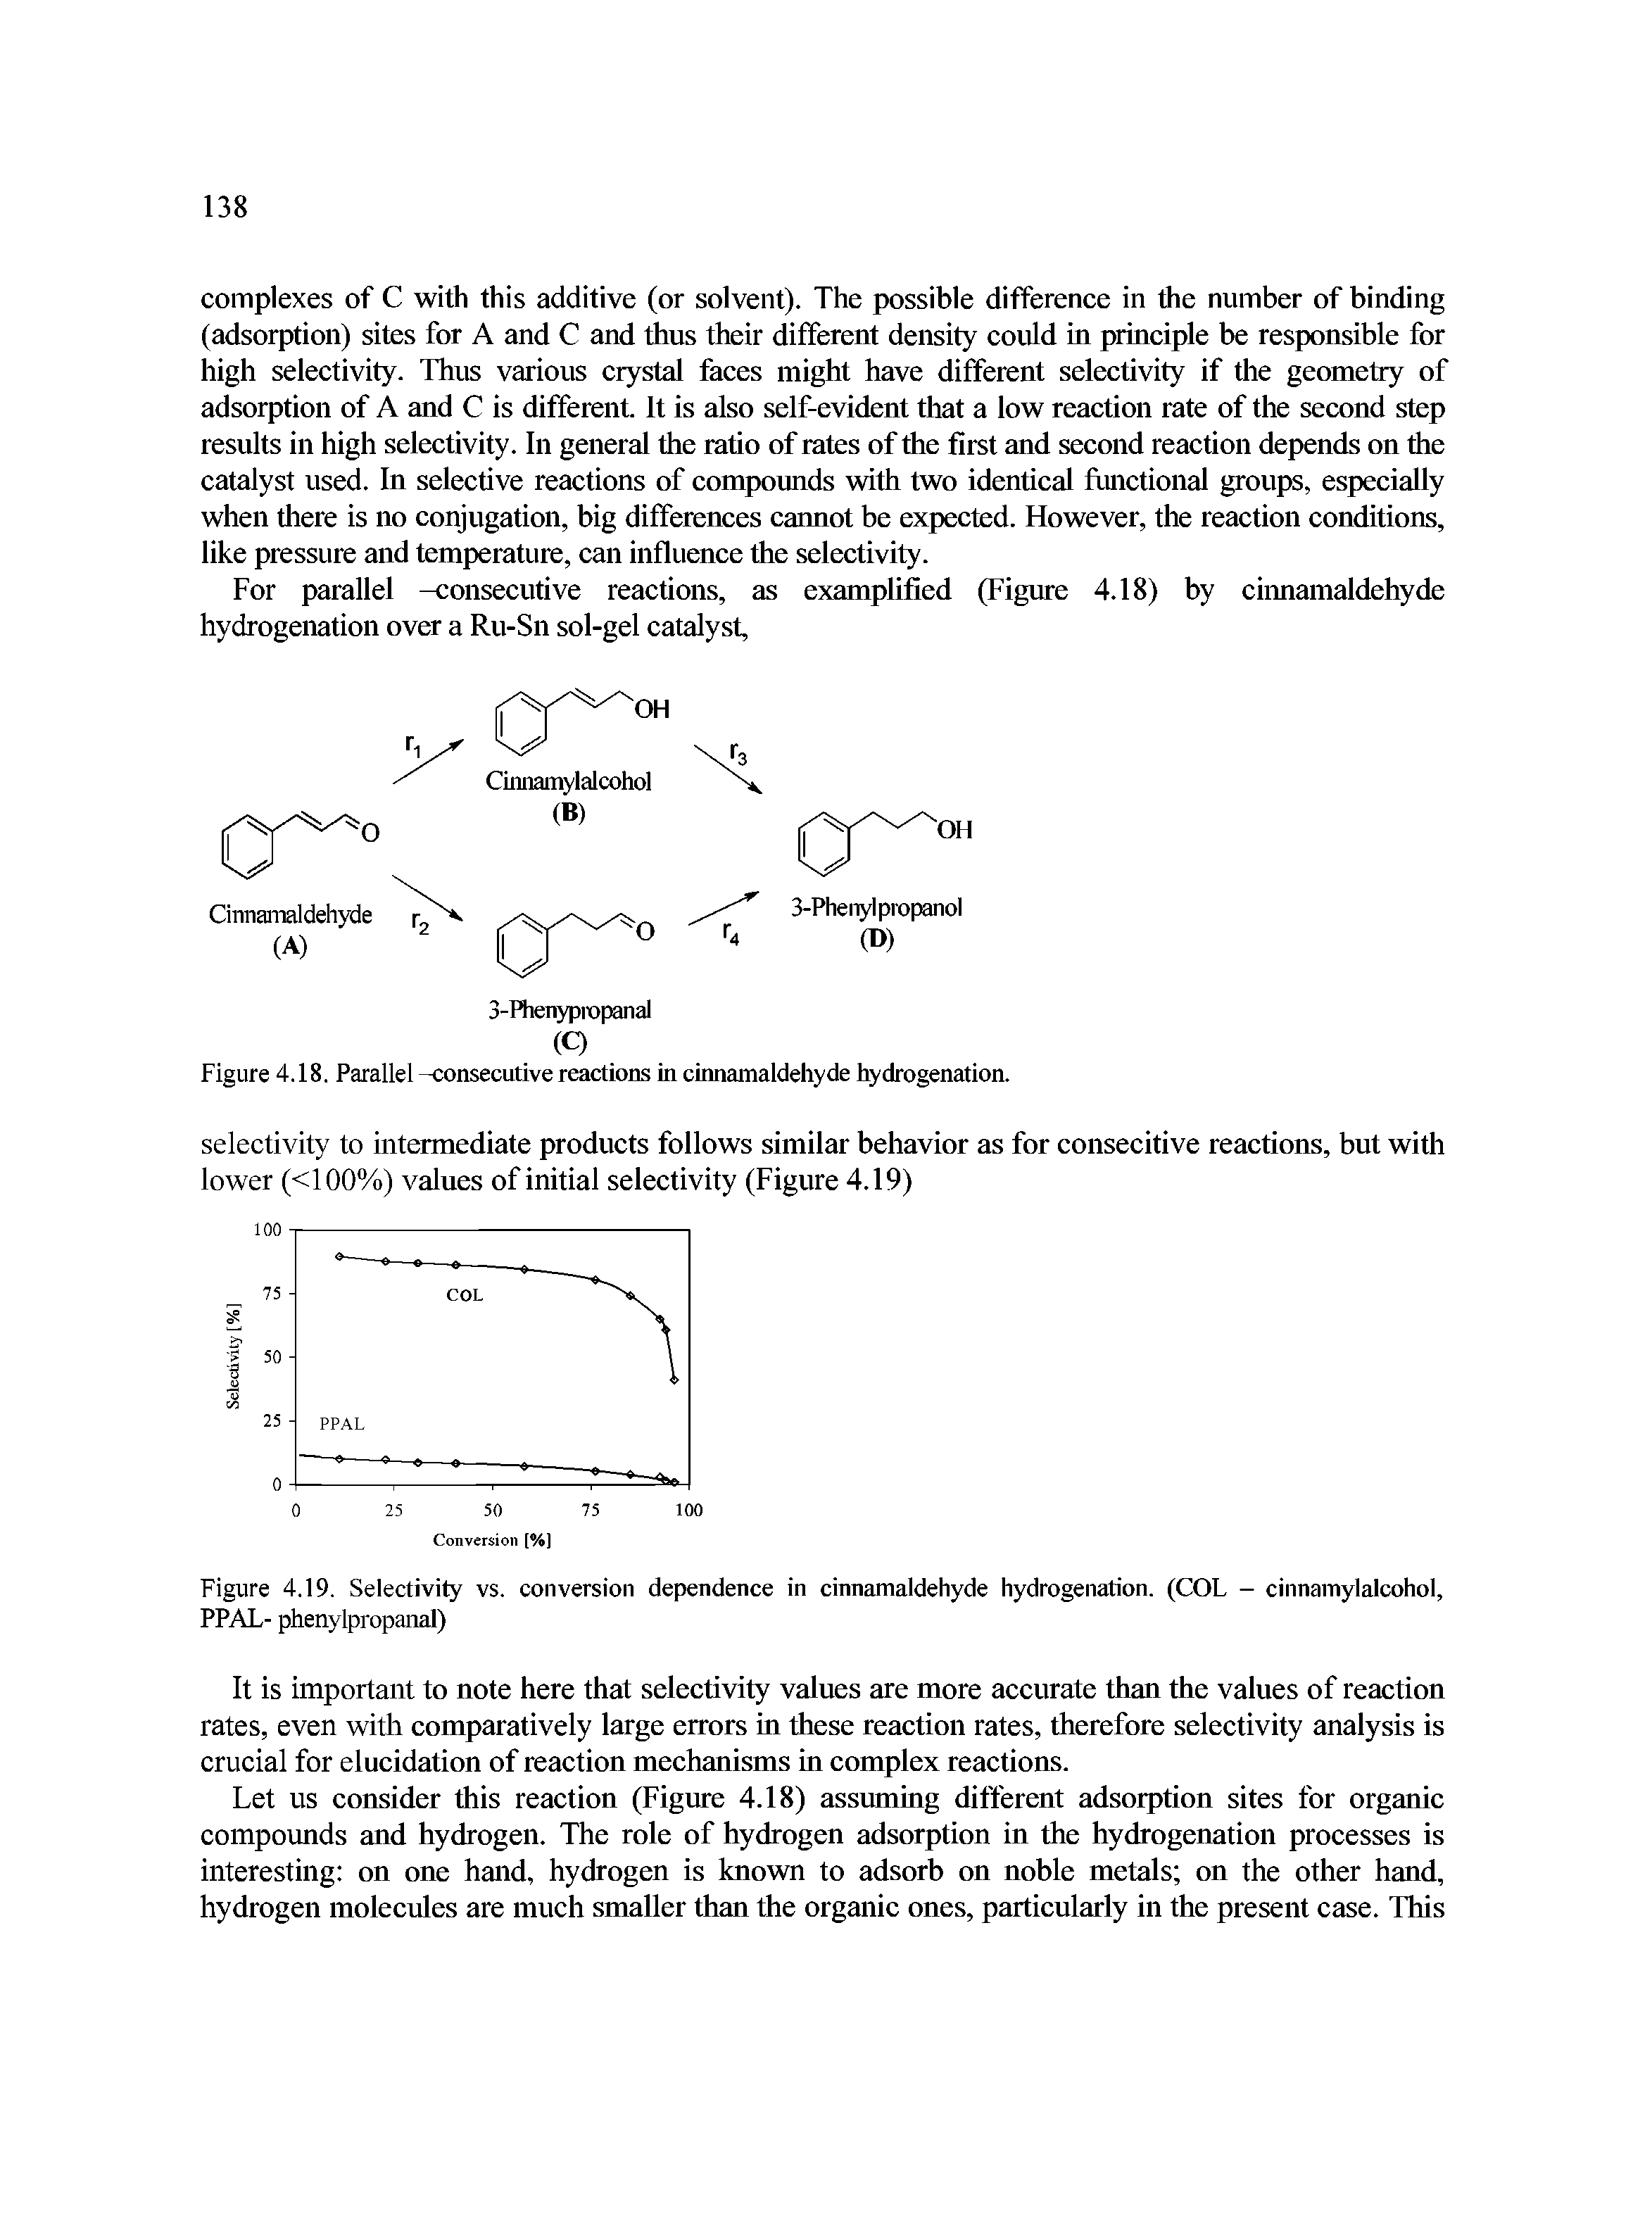 Figure 4.19. Selectivity vs. conversion dependence in cinnamaldehyde hydrogenation. (COL - cinnamylalcohol, PPAL- phenylpropanal)...